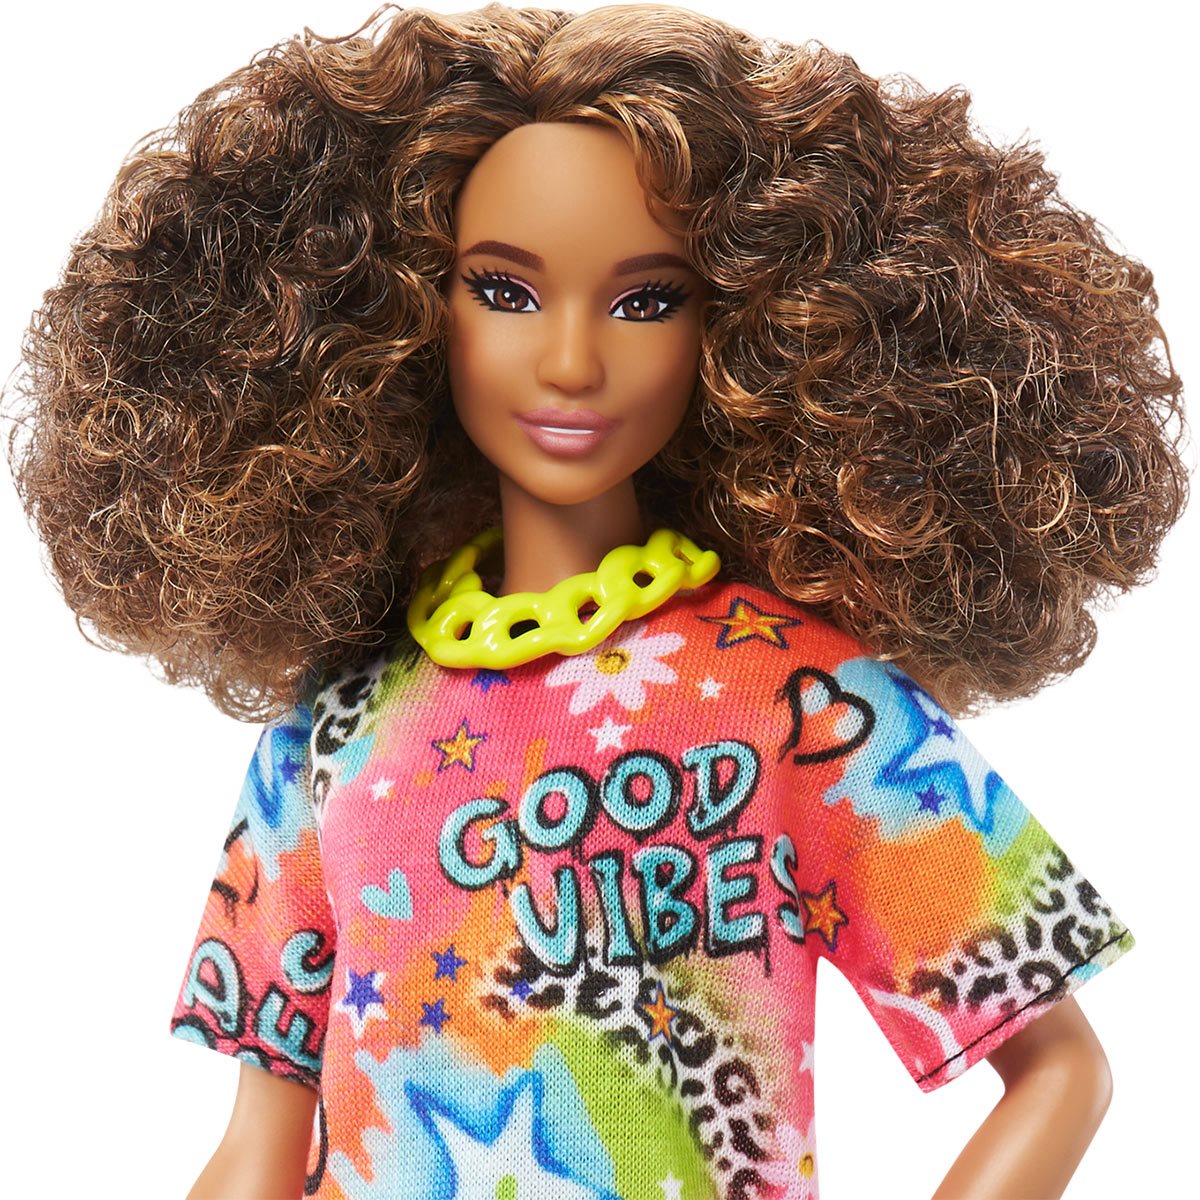 Authenticatie lineair Hobart Barbie Fashionista Doll #201 with Graffiti-Print T-Shirt Dress